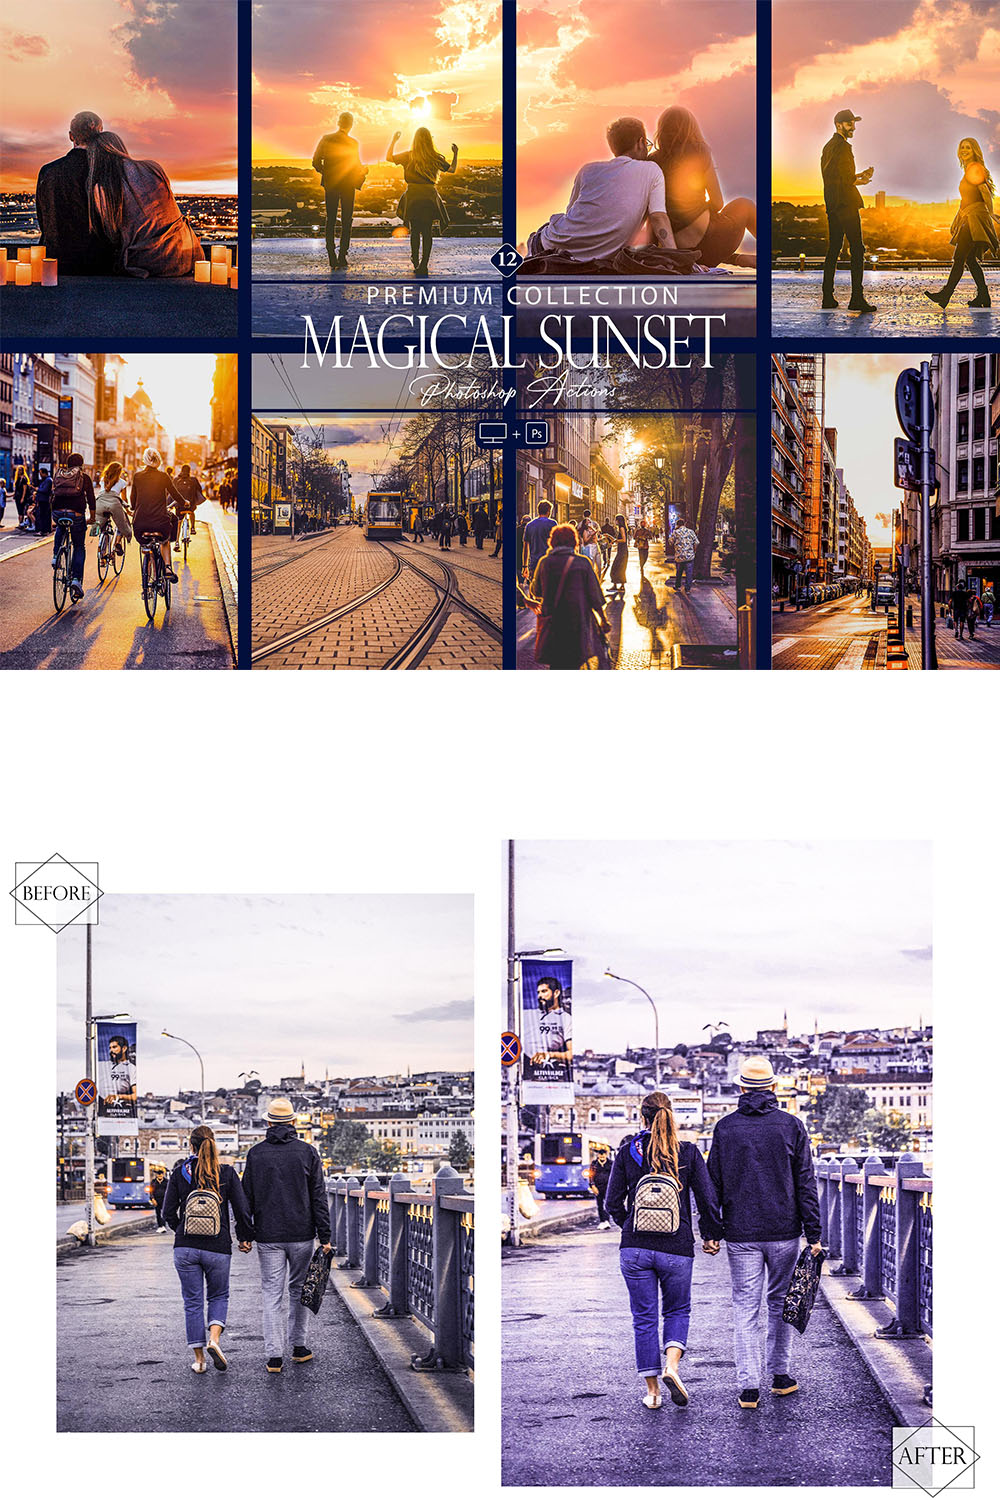 12 Photoshop Actions, Magical Sunset Ps Action, Blue ACR Preset, Saturation Filter, Lifestyle Theme For Instagram, Golden Hour, Cloud Photos pinterest preview image.